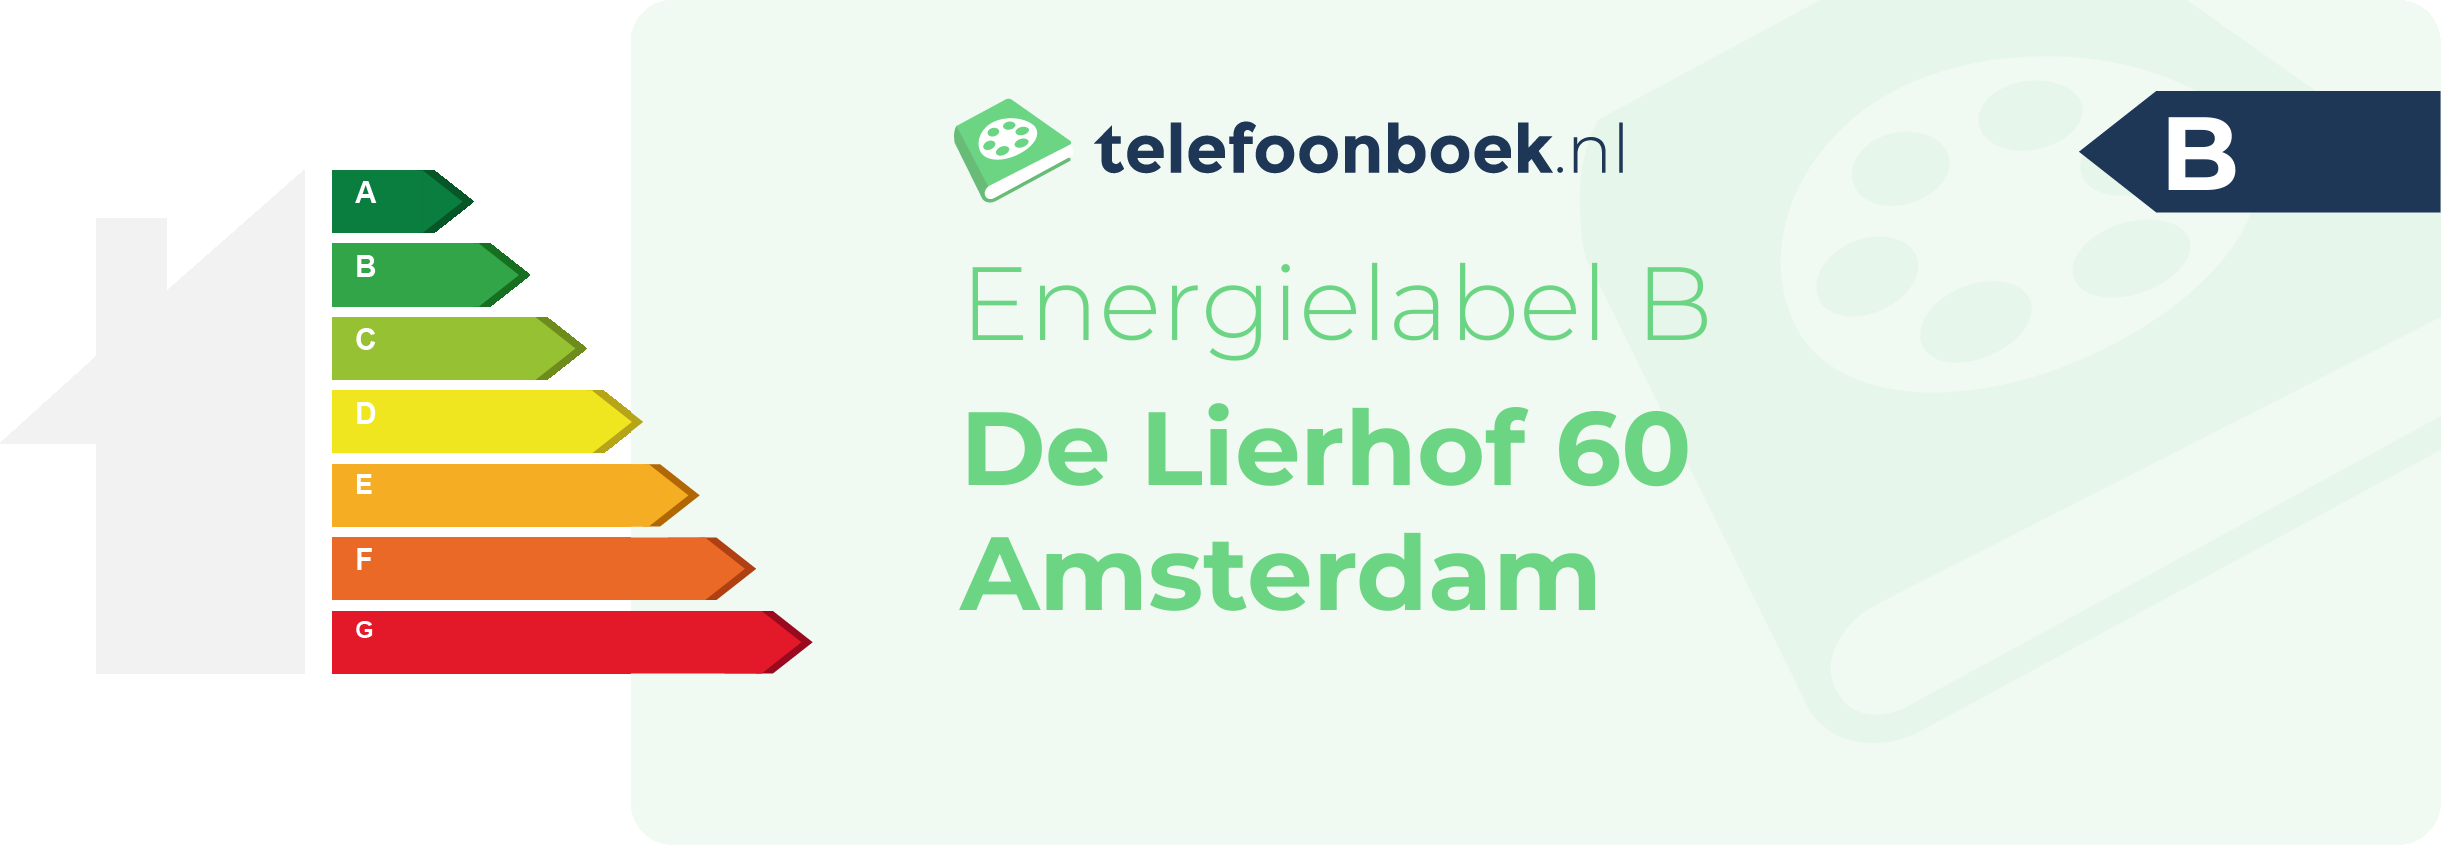 Energielabel De Lierhof 60 Amsterdam